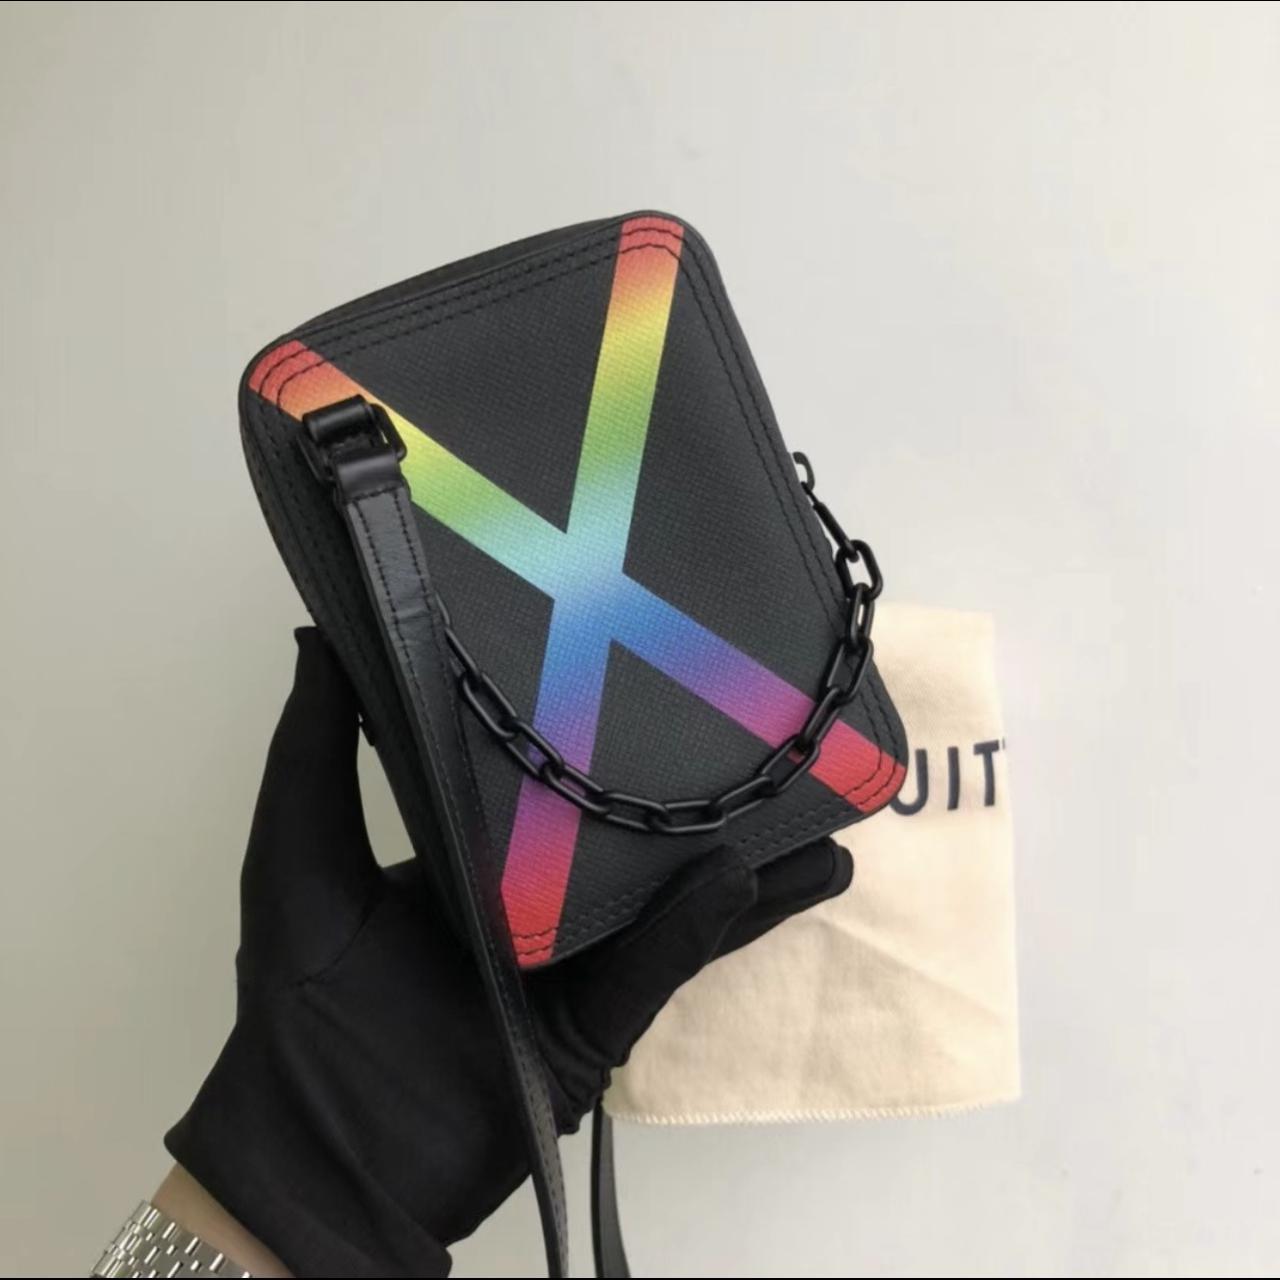 Louis Vuitton Danube Rainbow Messenger Bag - Luxury Helsinki